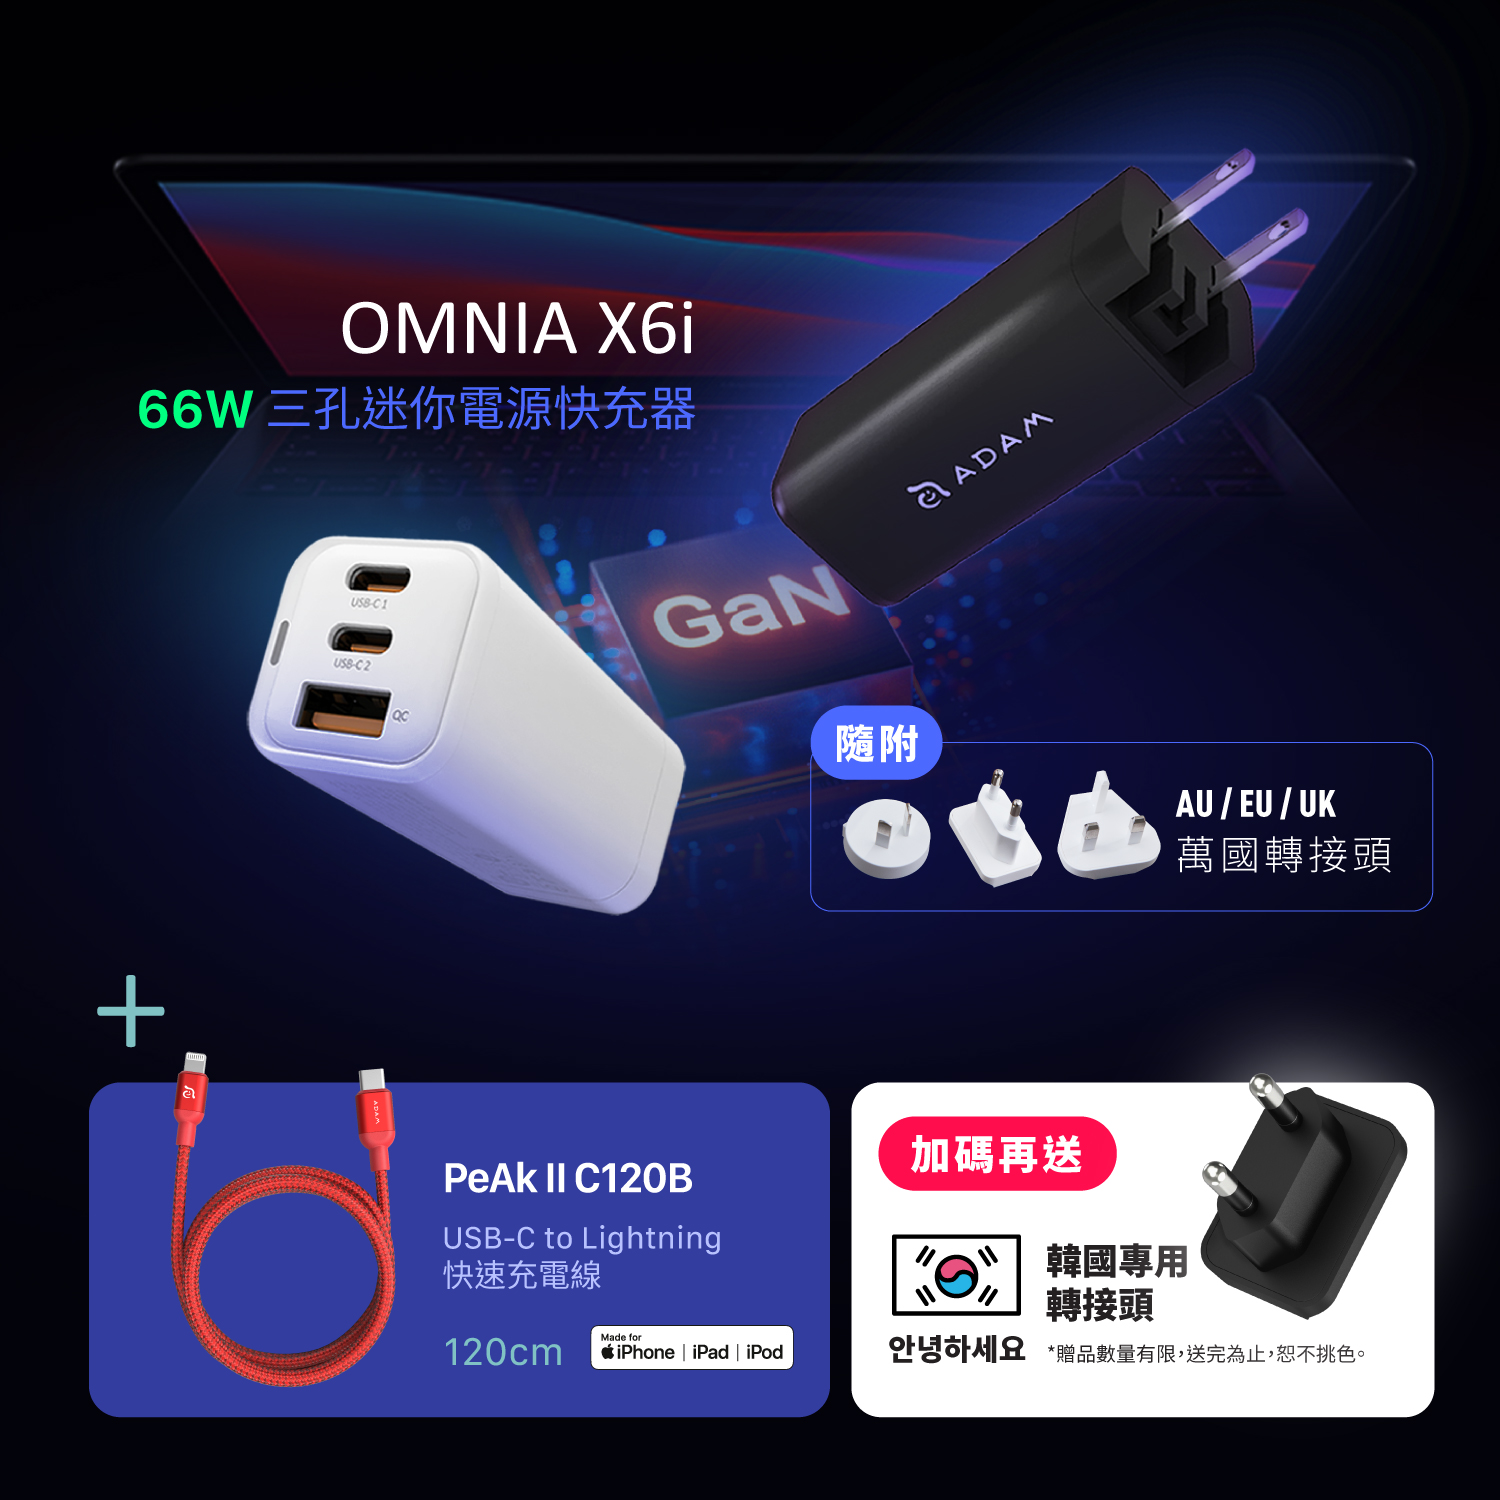 OMNIA X6i 66W USB-C 三孔迷你快速電源供應器_PeAk II C120B 金屬編織傳輸線